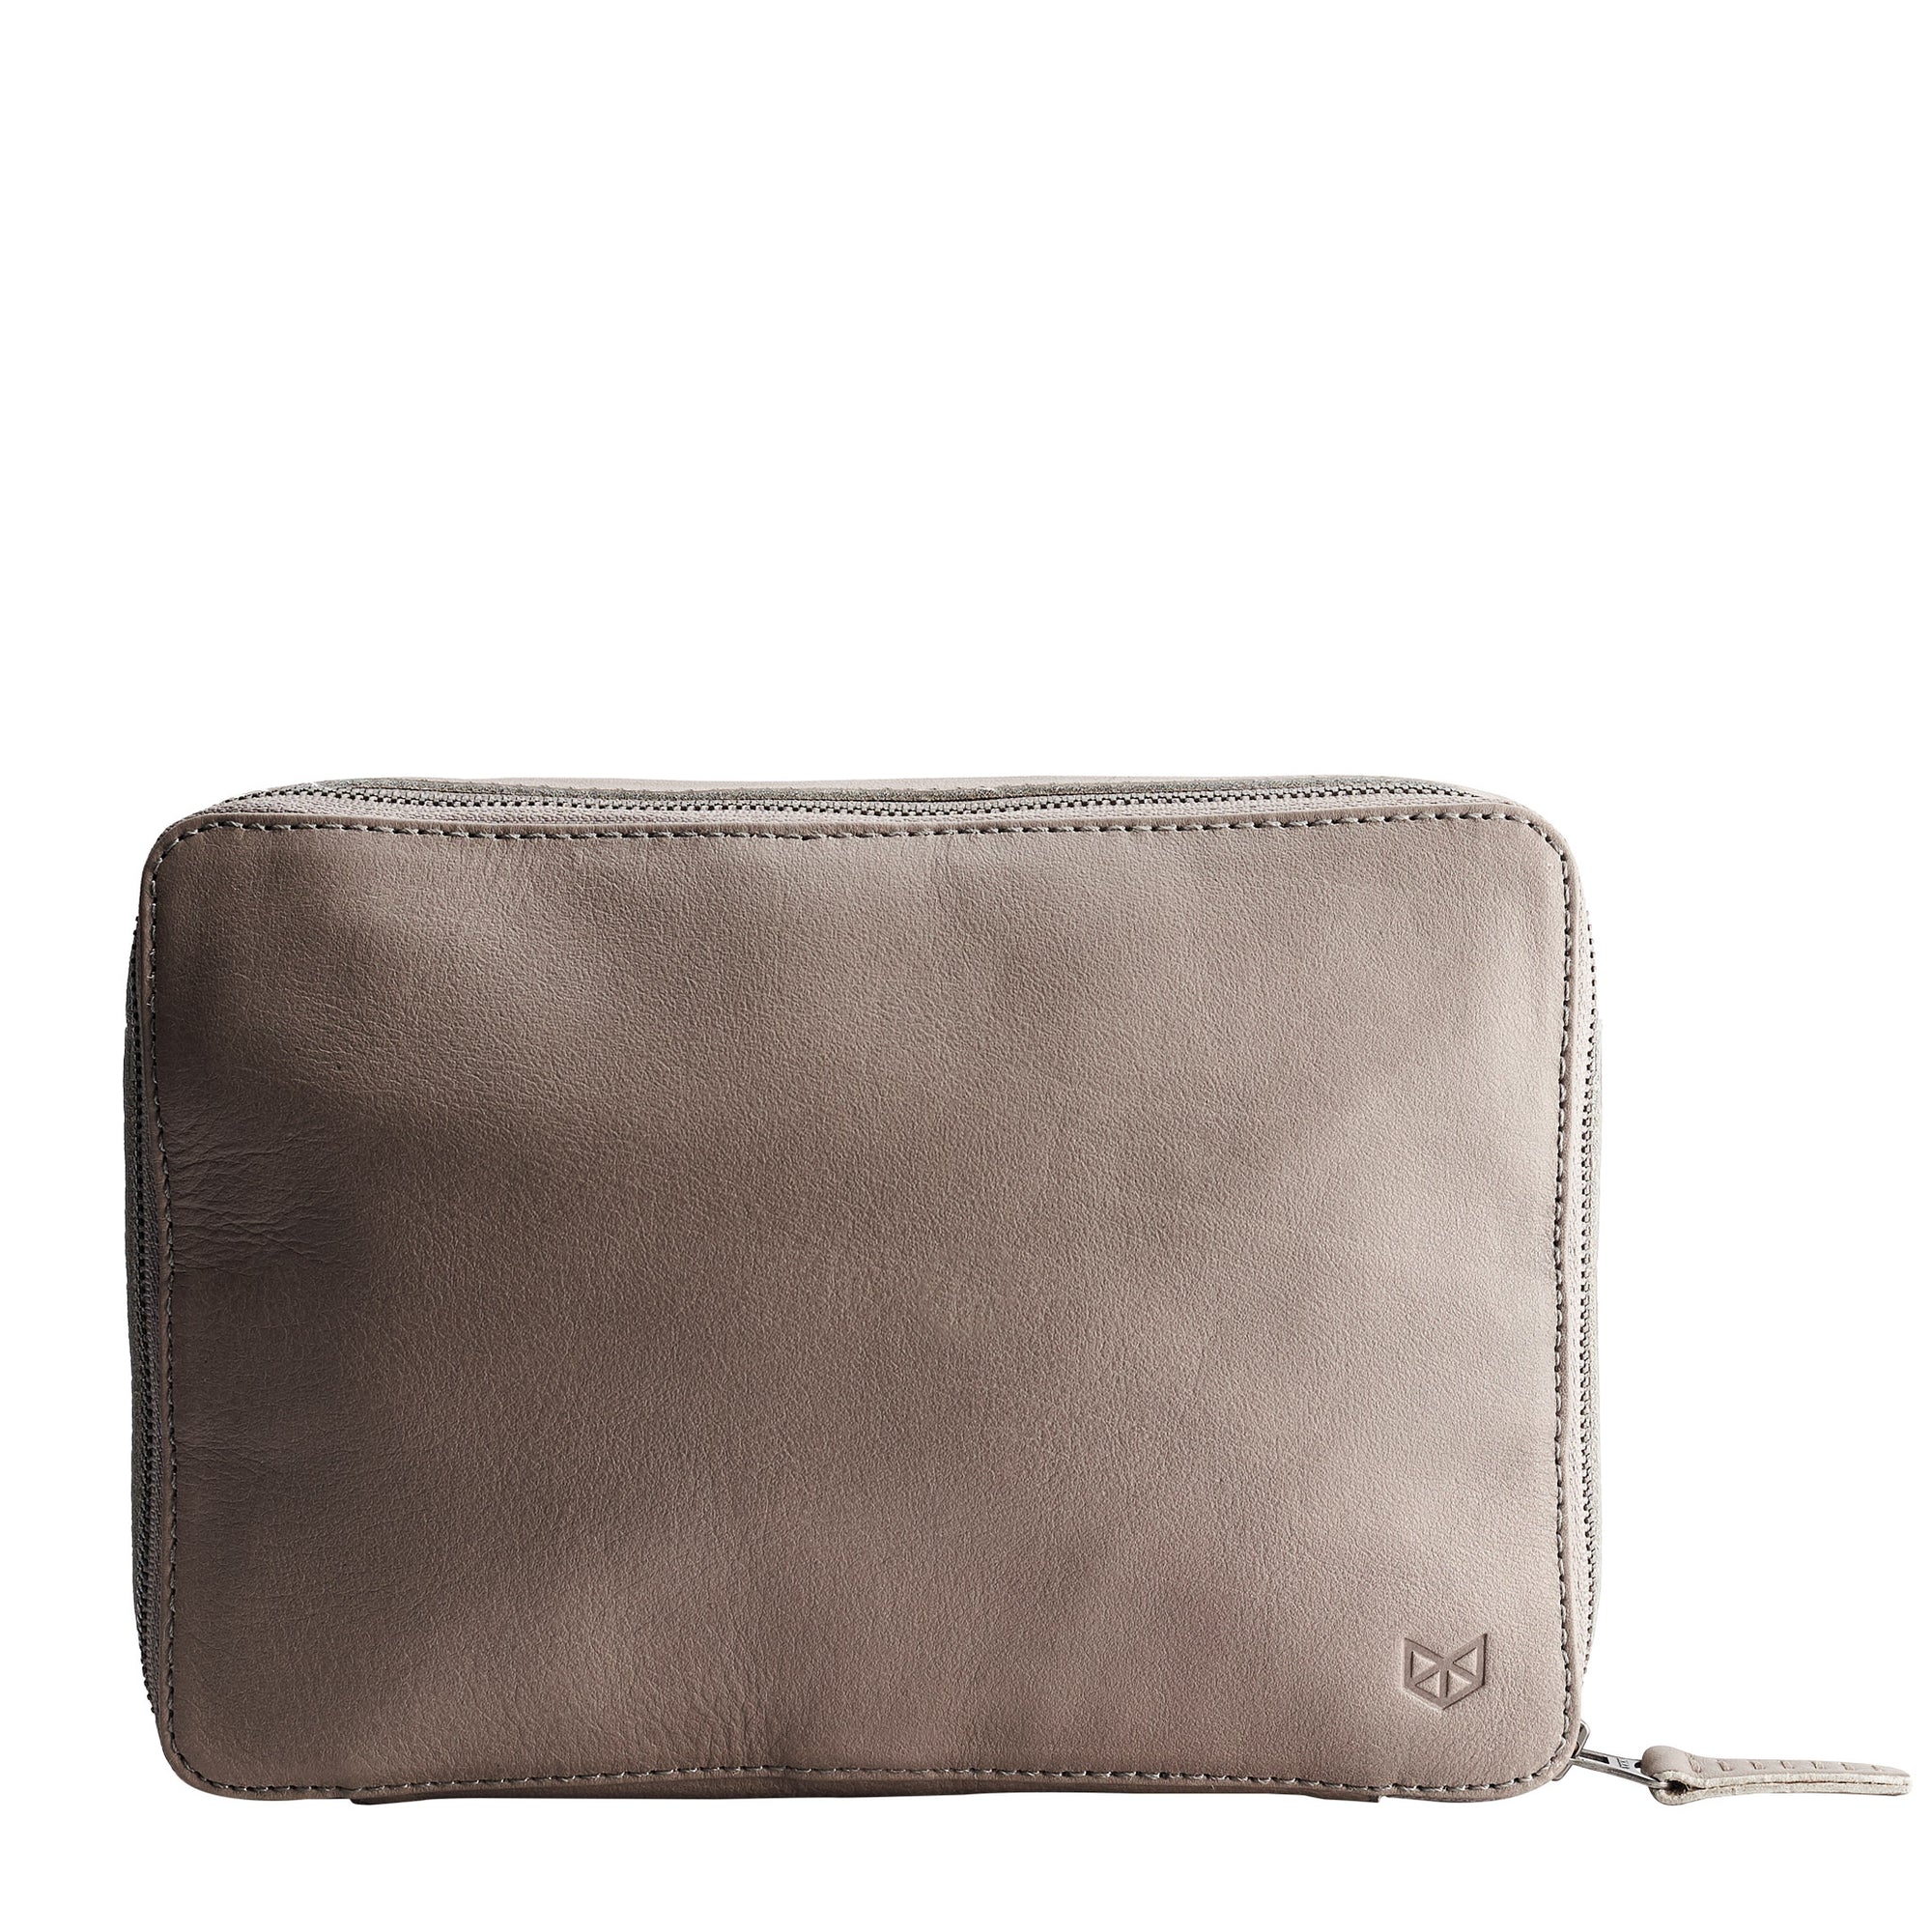 Grey edc gear bag by Capra Leather. Fits iPad 11 Pro